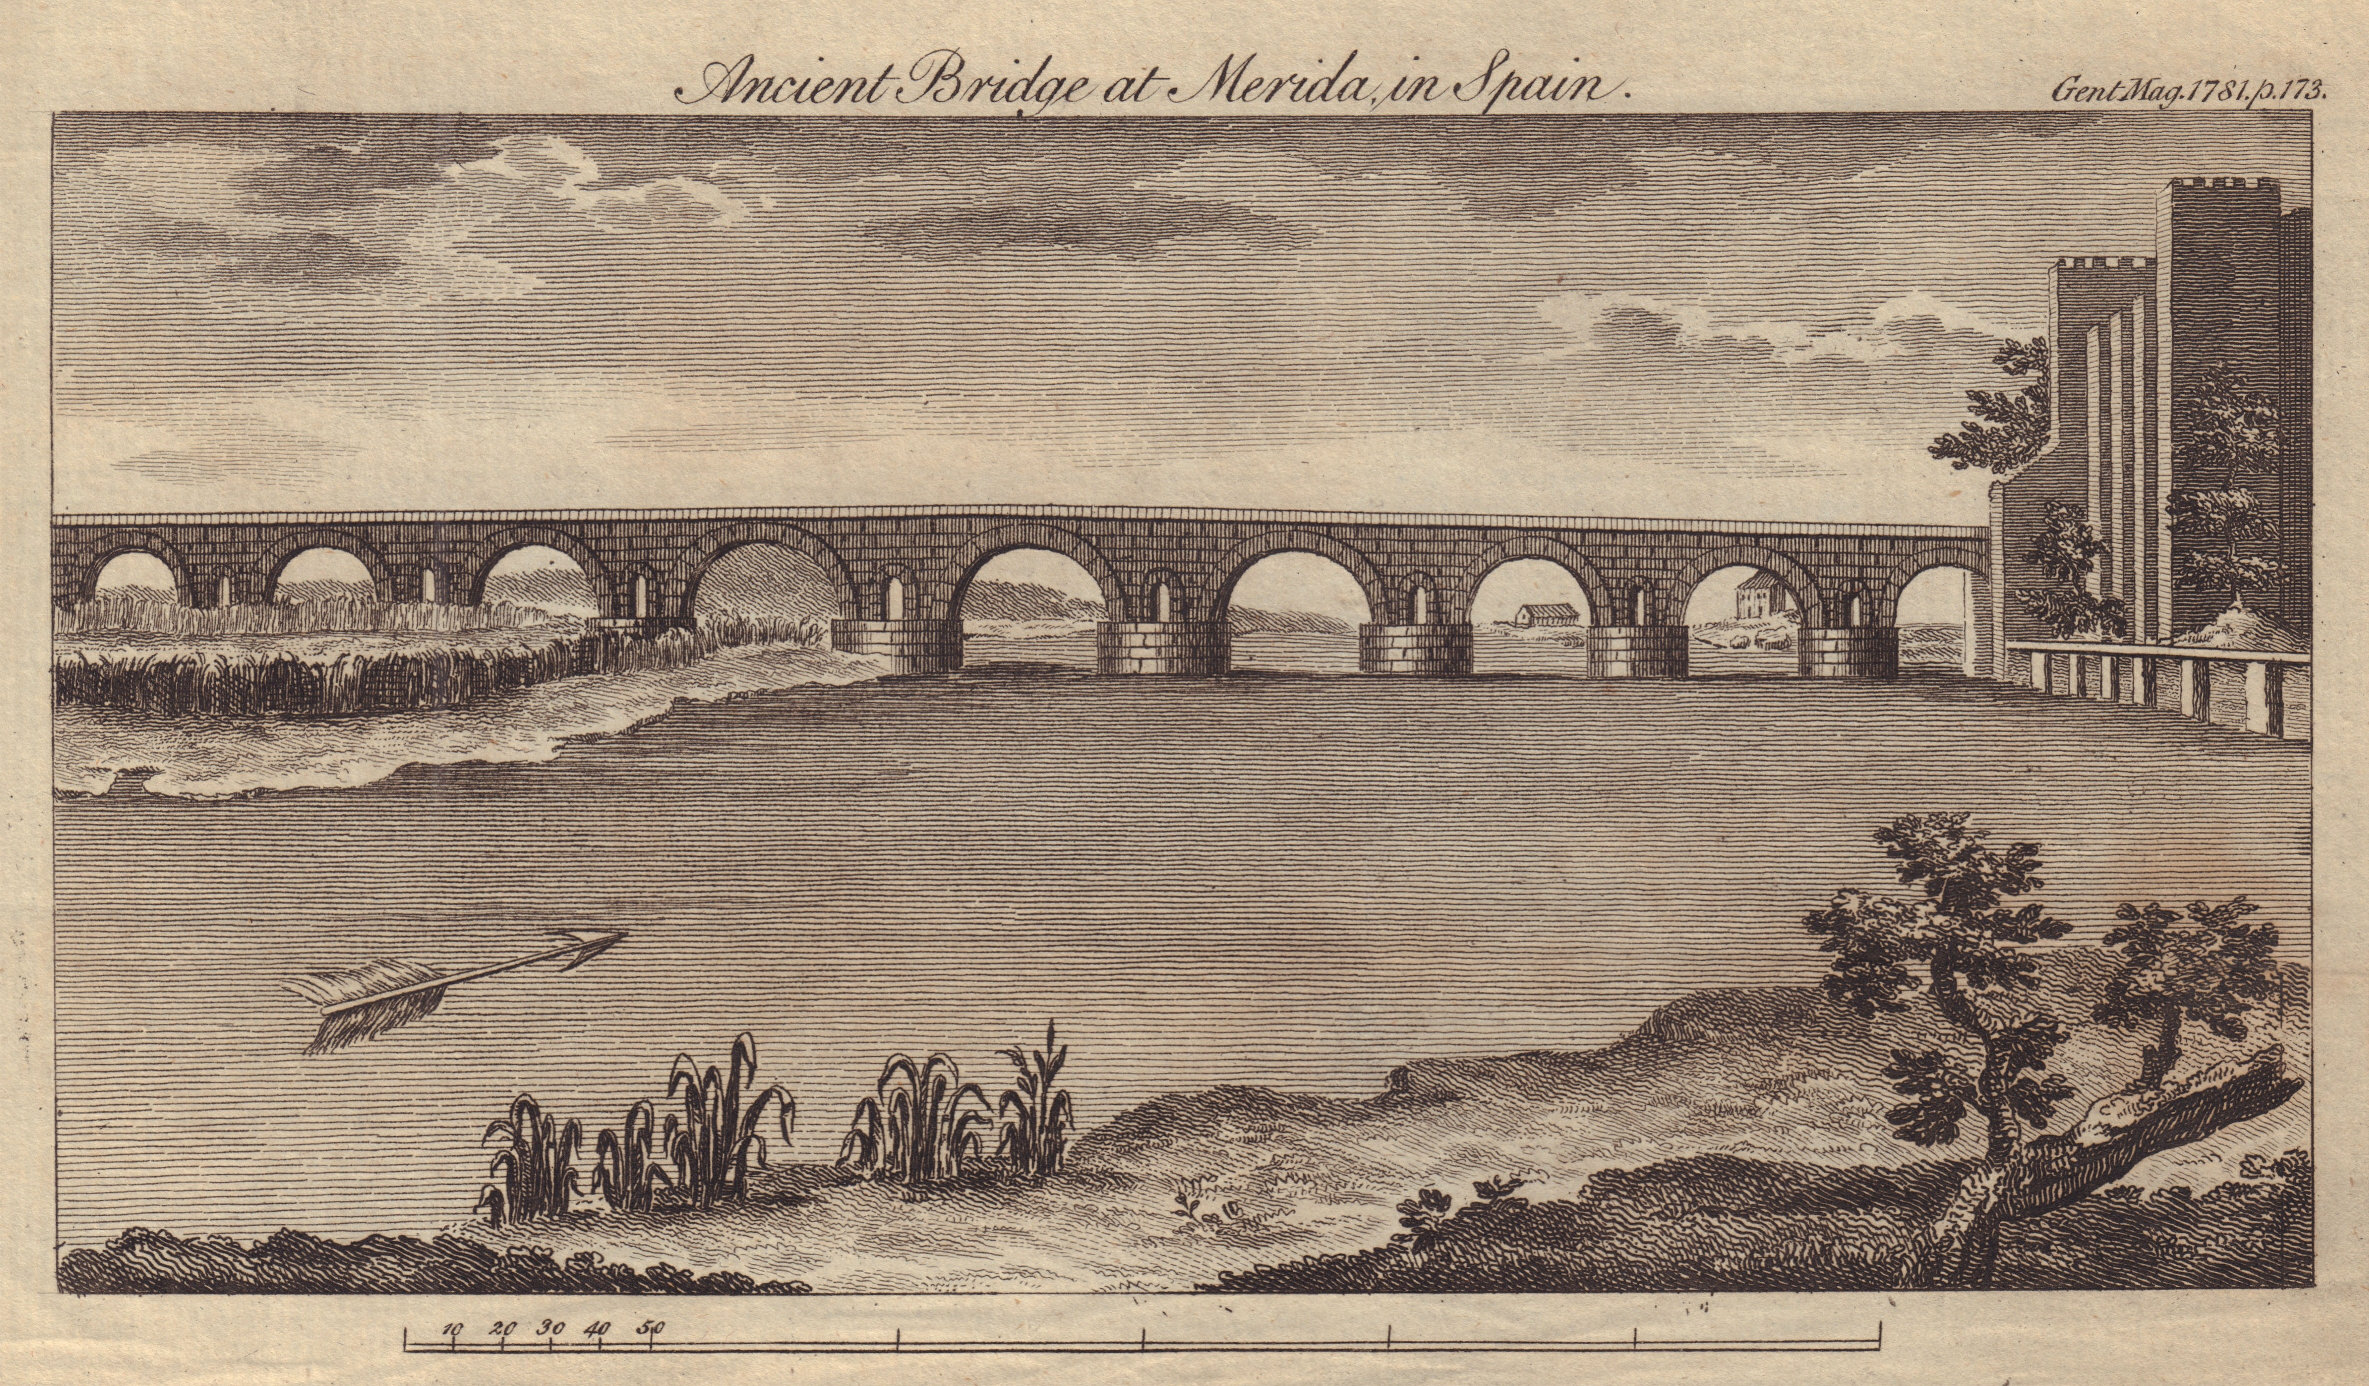 Ancient Bridge at Merida in Spain. Puente Romano, Mérida. GENTS MAG 1781 print